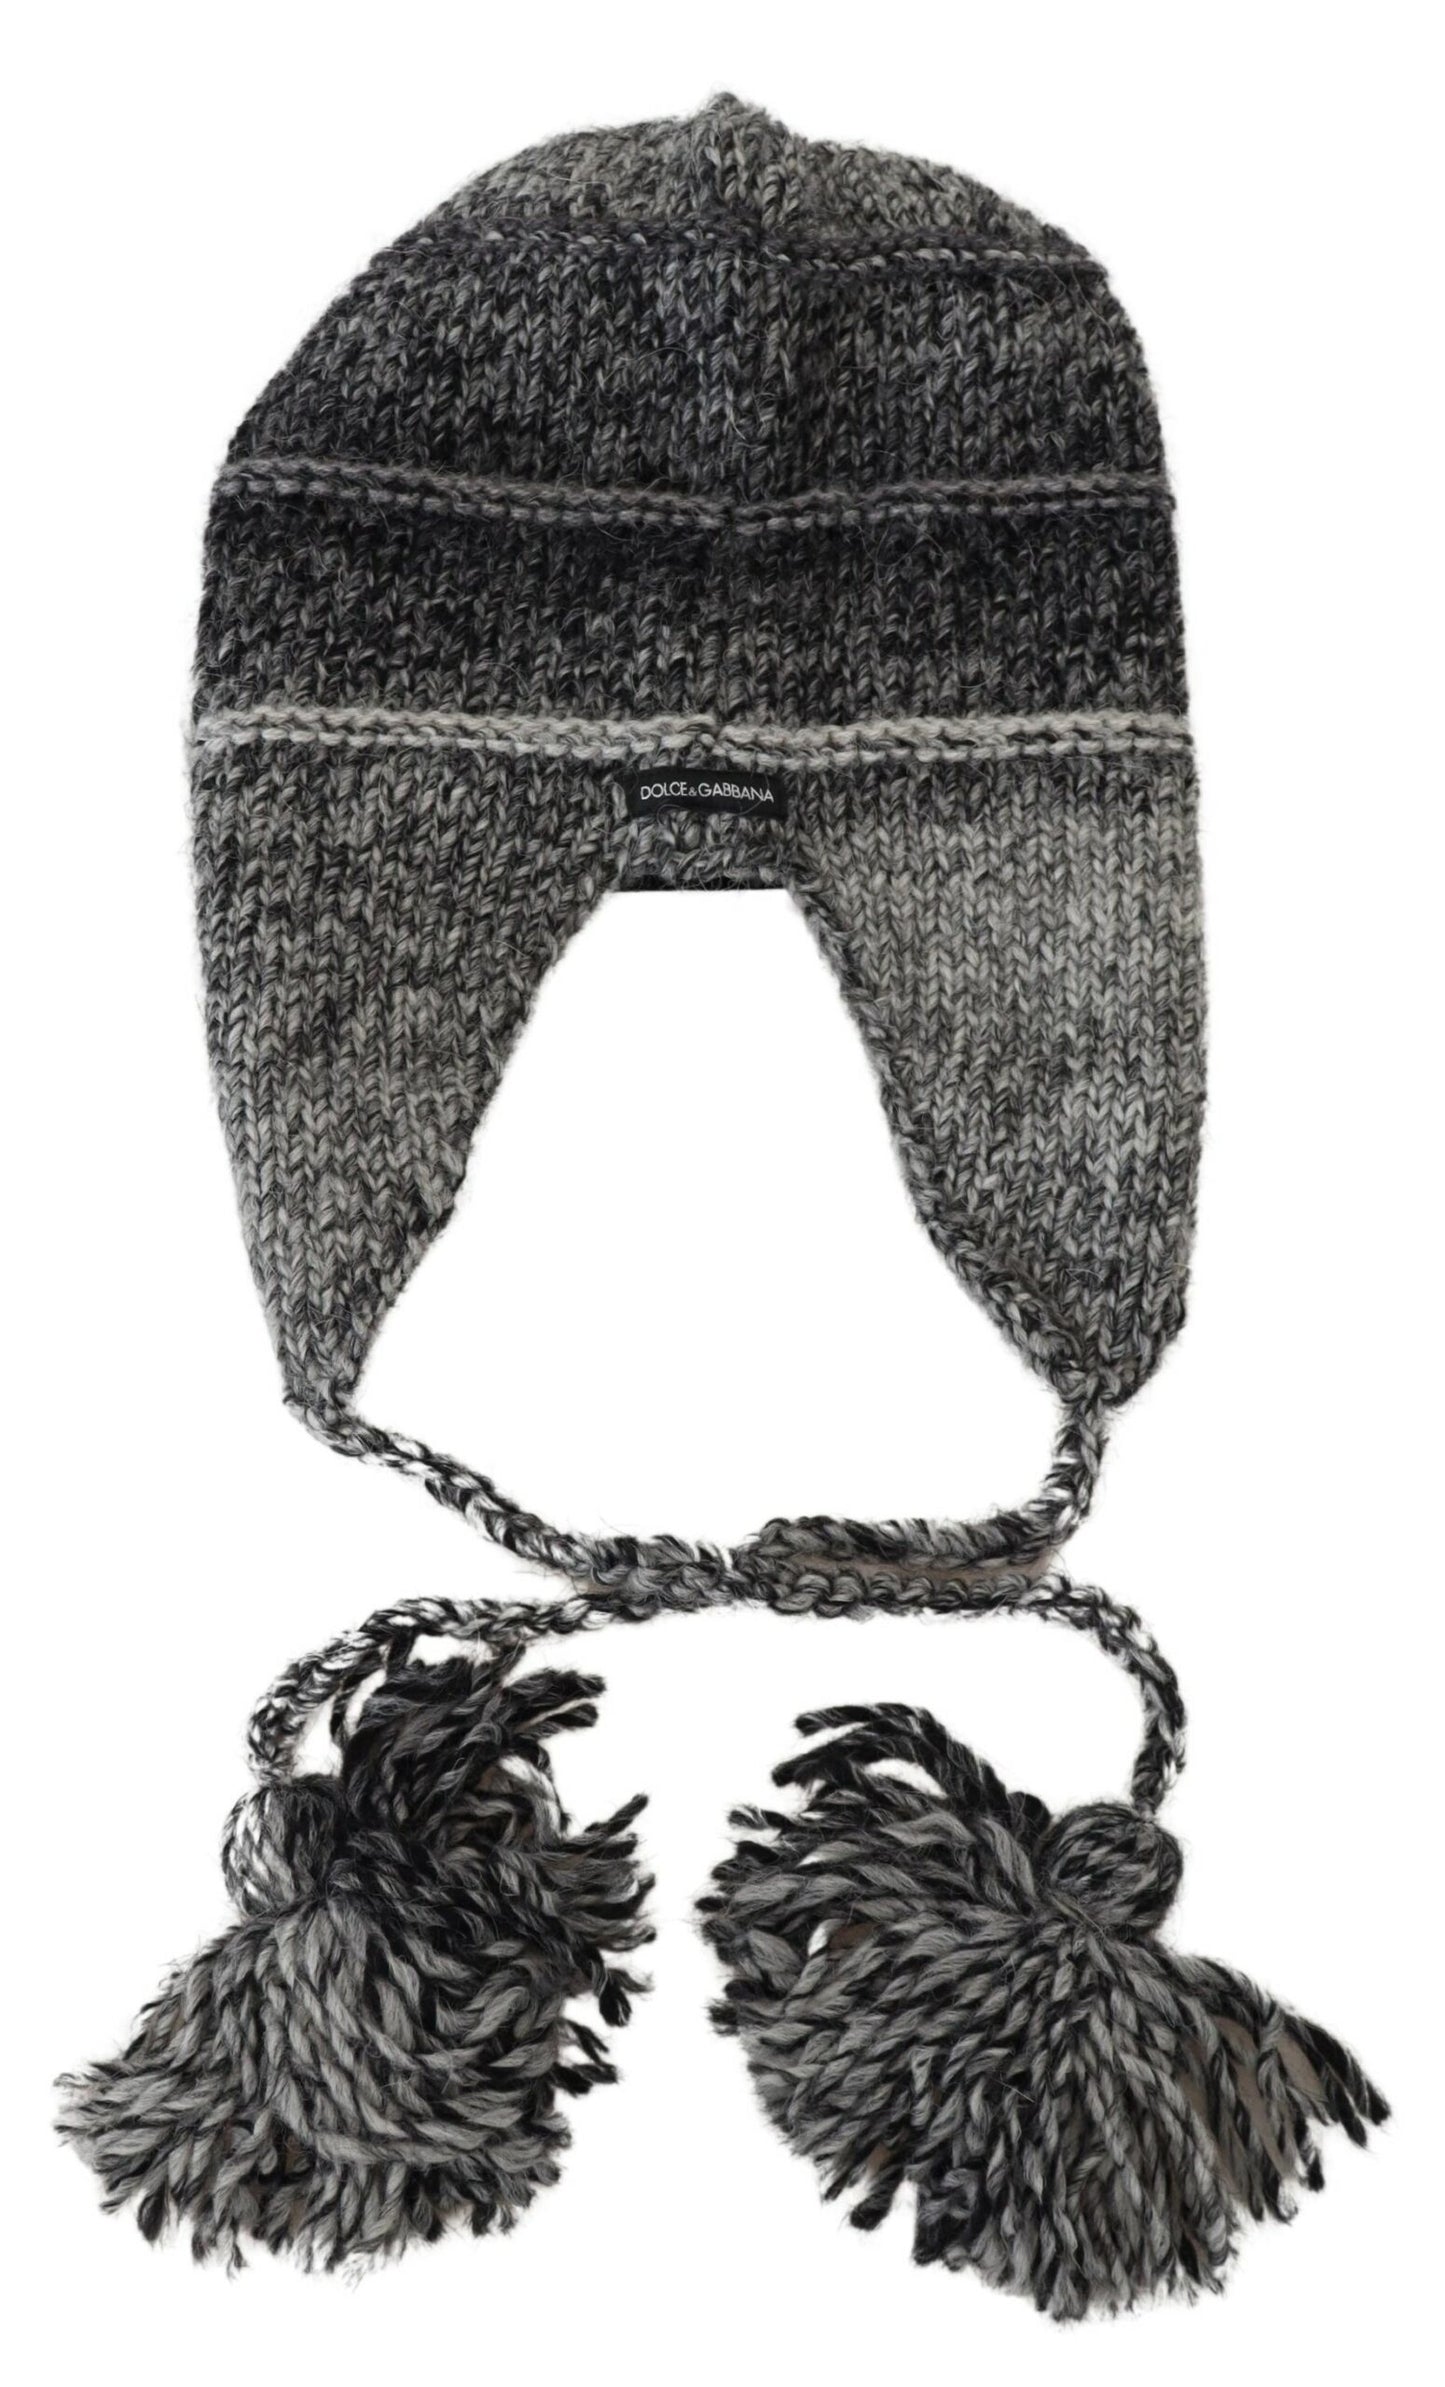 Elegant Gray Knitted Beanie Hat